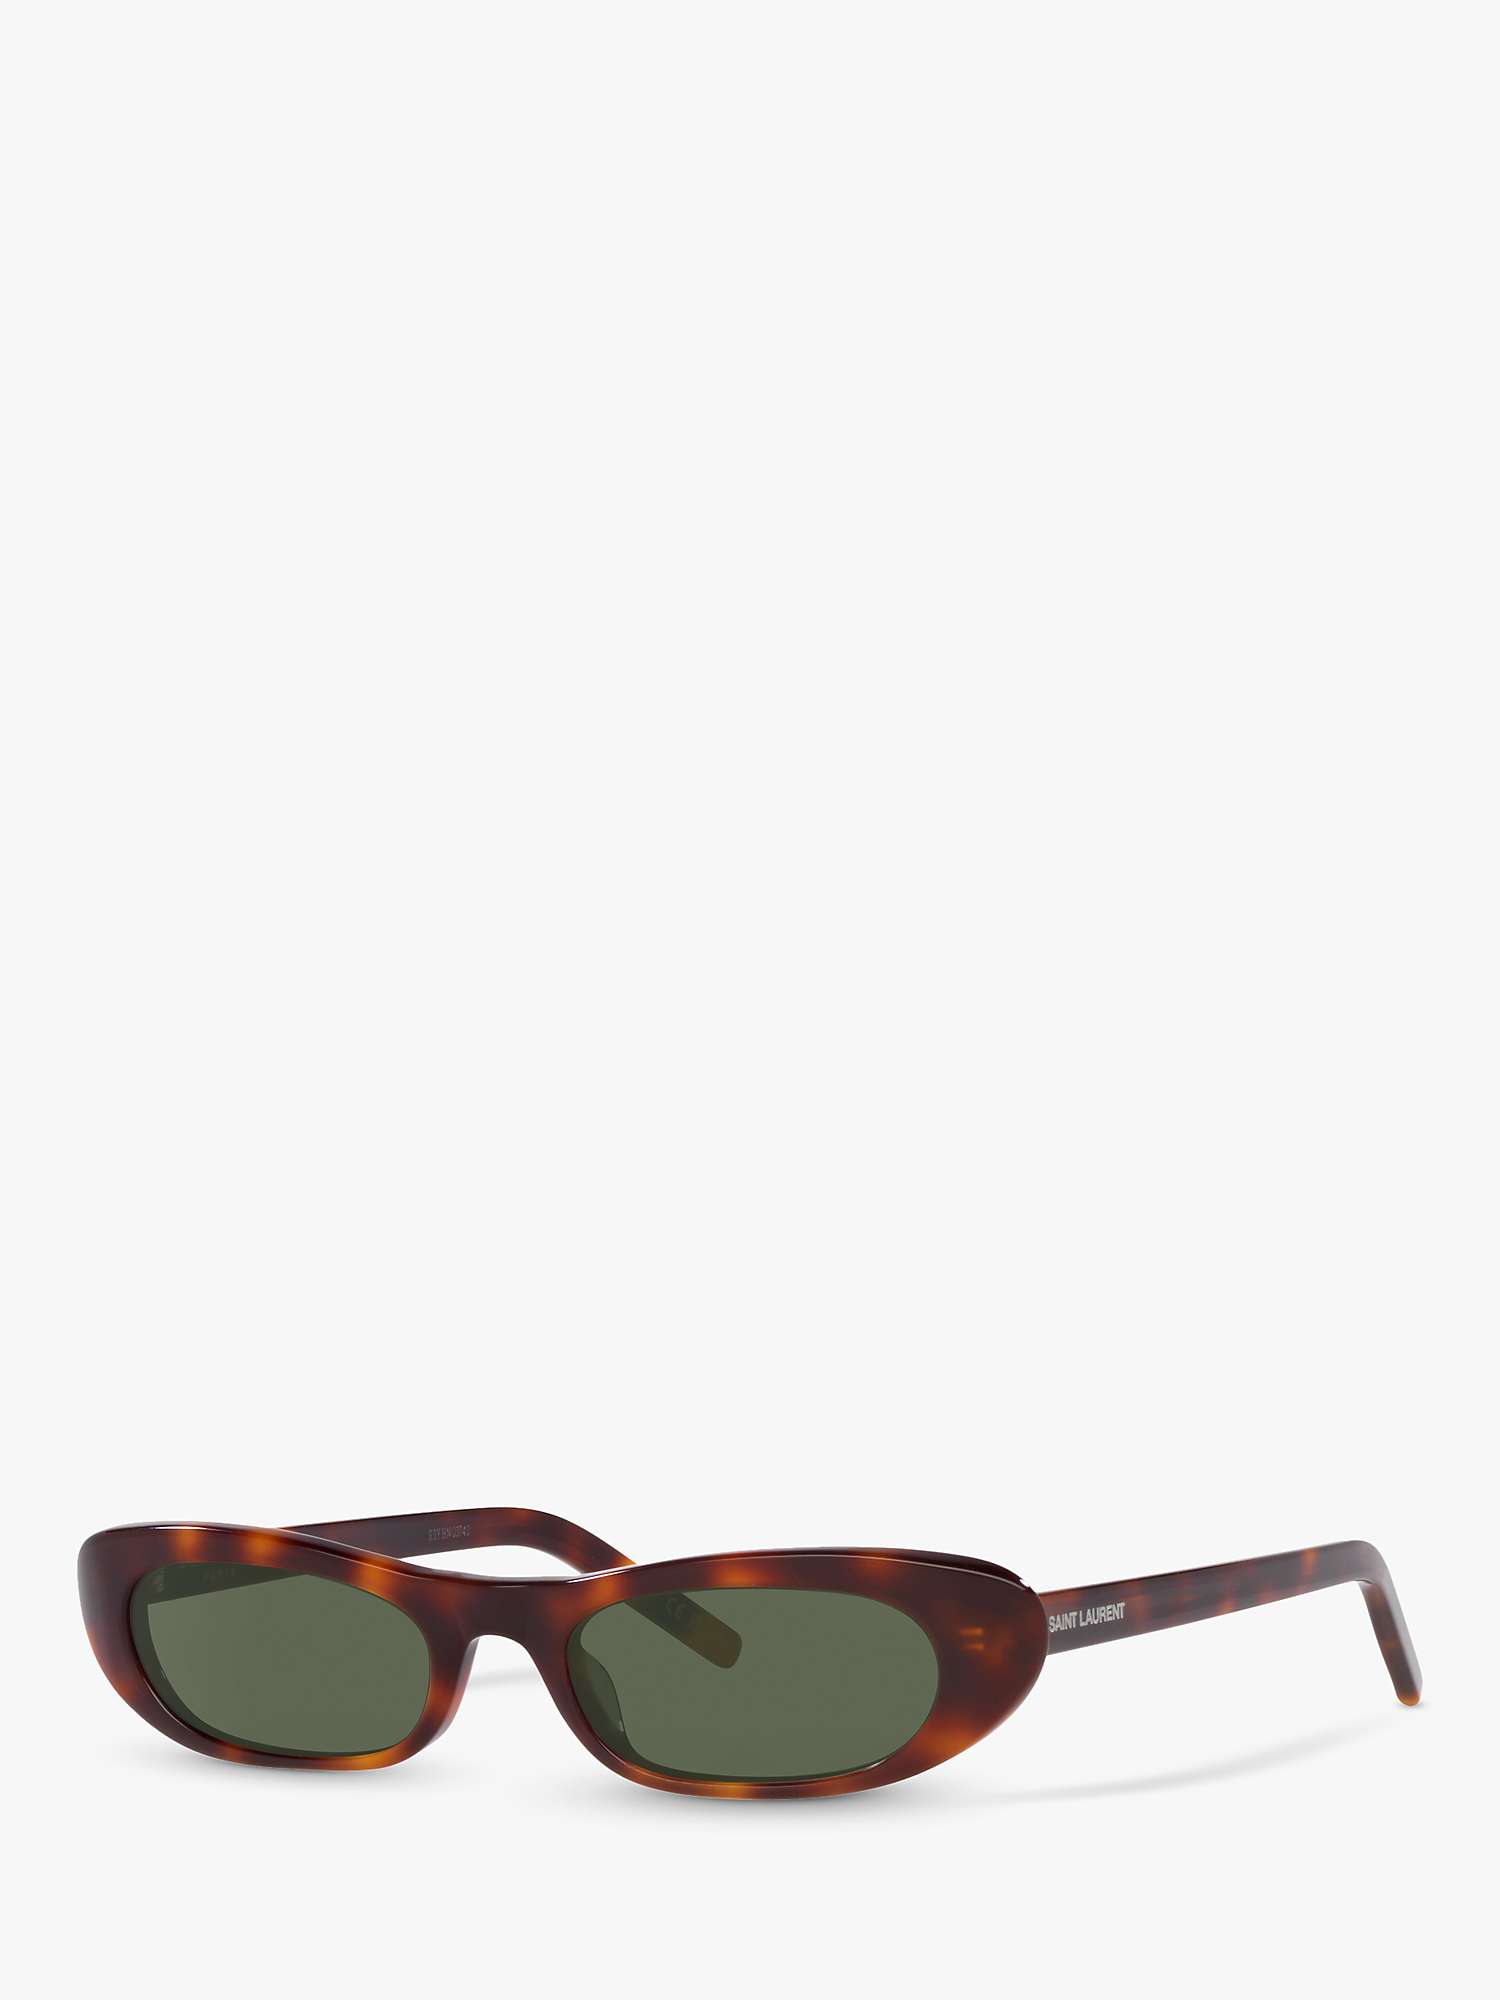 Buy Yves Saint Laurent YS000414 Women's Oval Sunglasses, Havana/Green Online at johnlewis.com